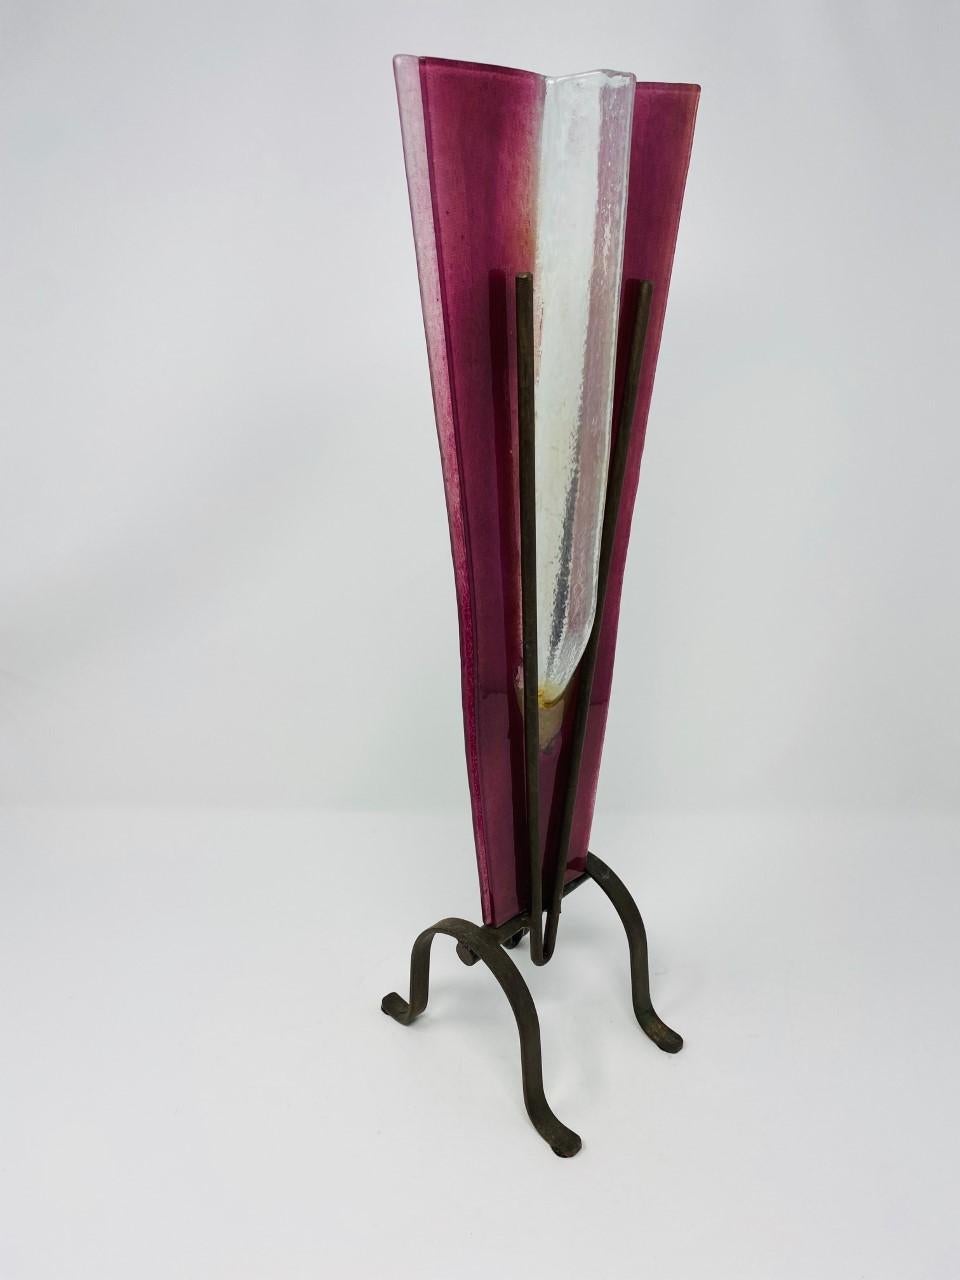 glass pedestal vases